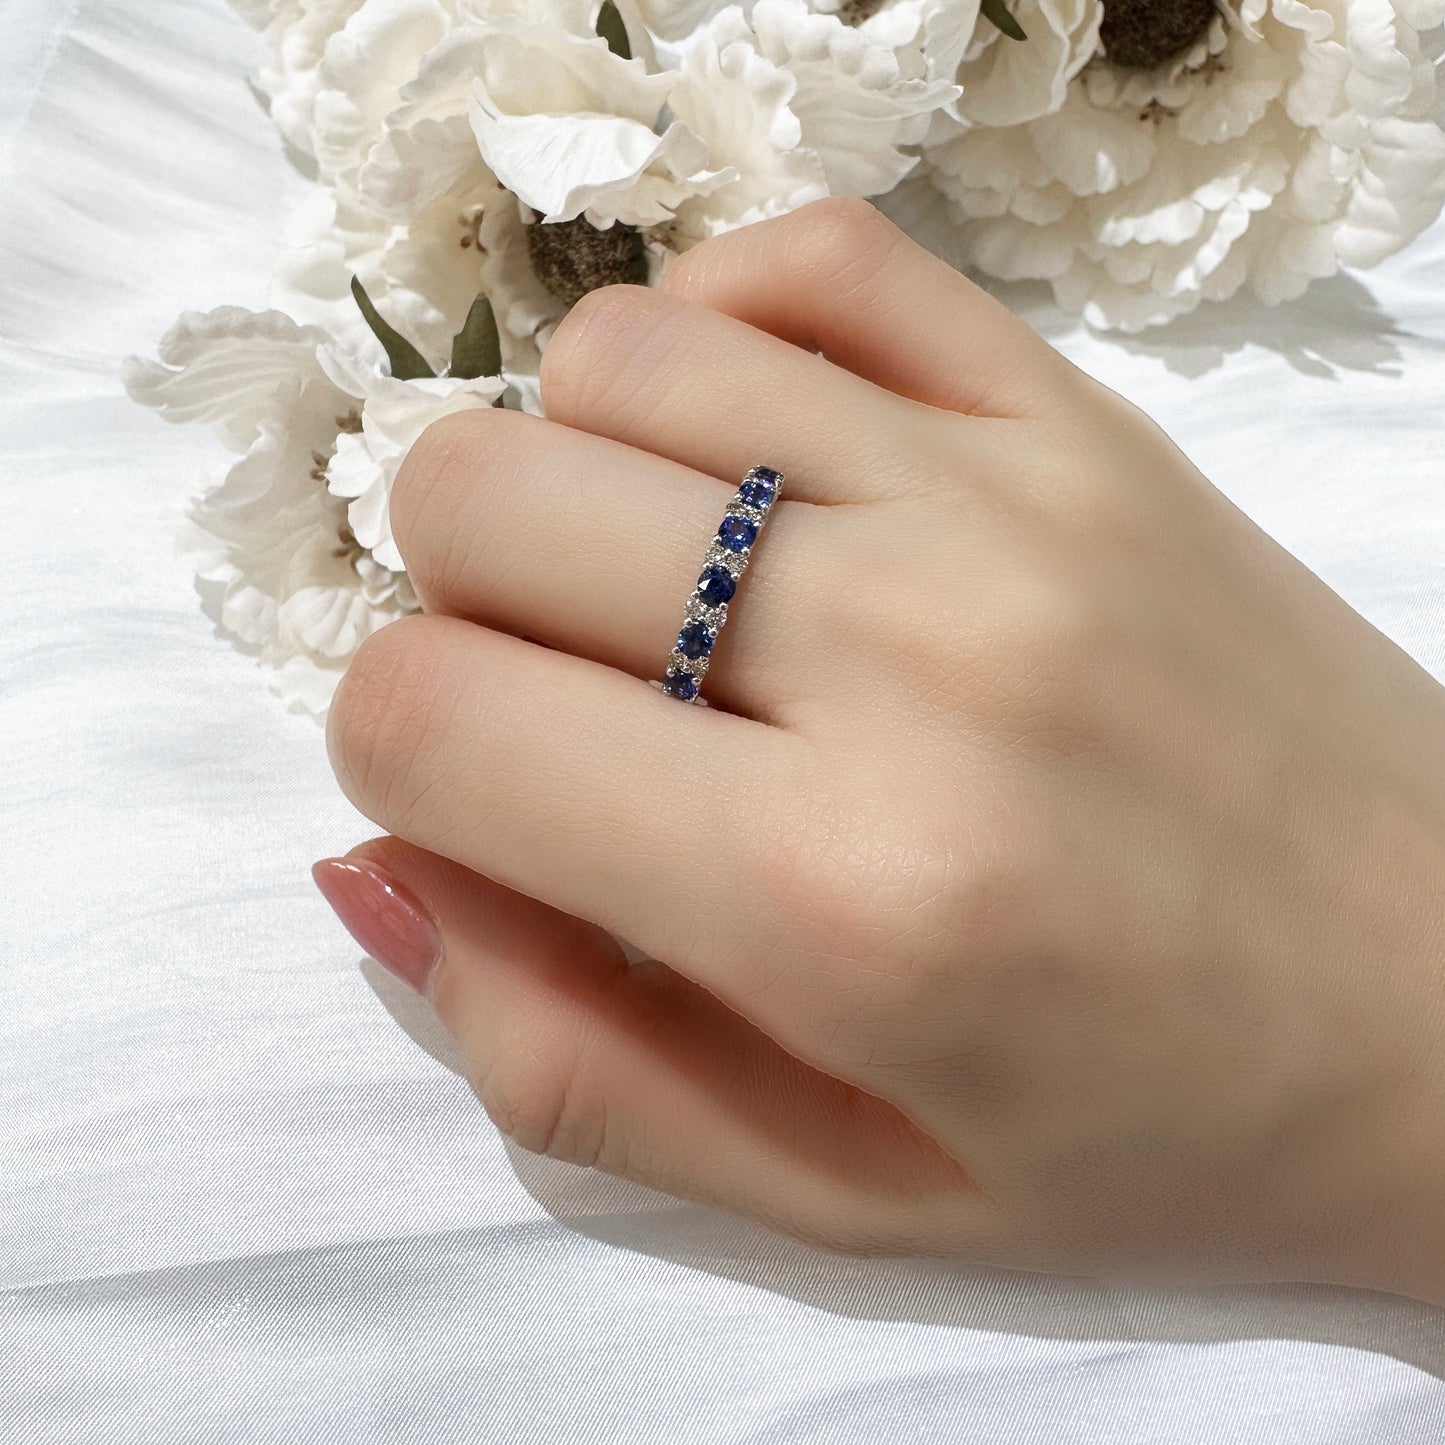 18k白金藍寶石鑽石戒指在中指上 18k White Gold Sapphire & Diamond Half Eternity Ring on middle finger